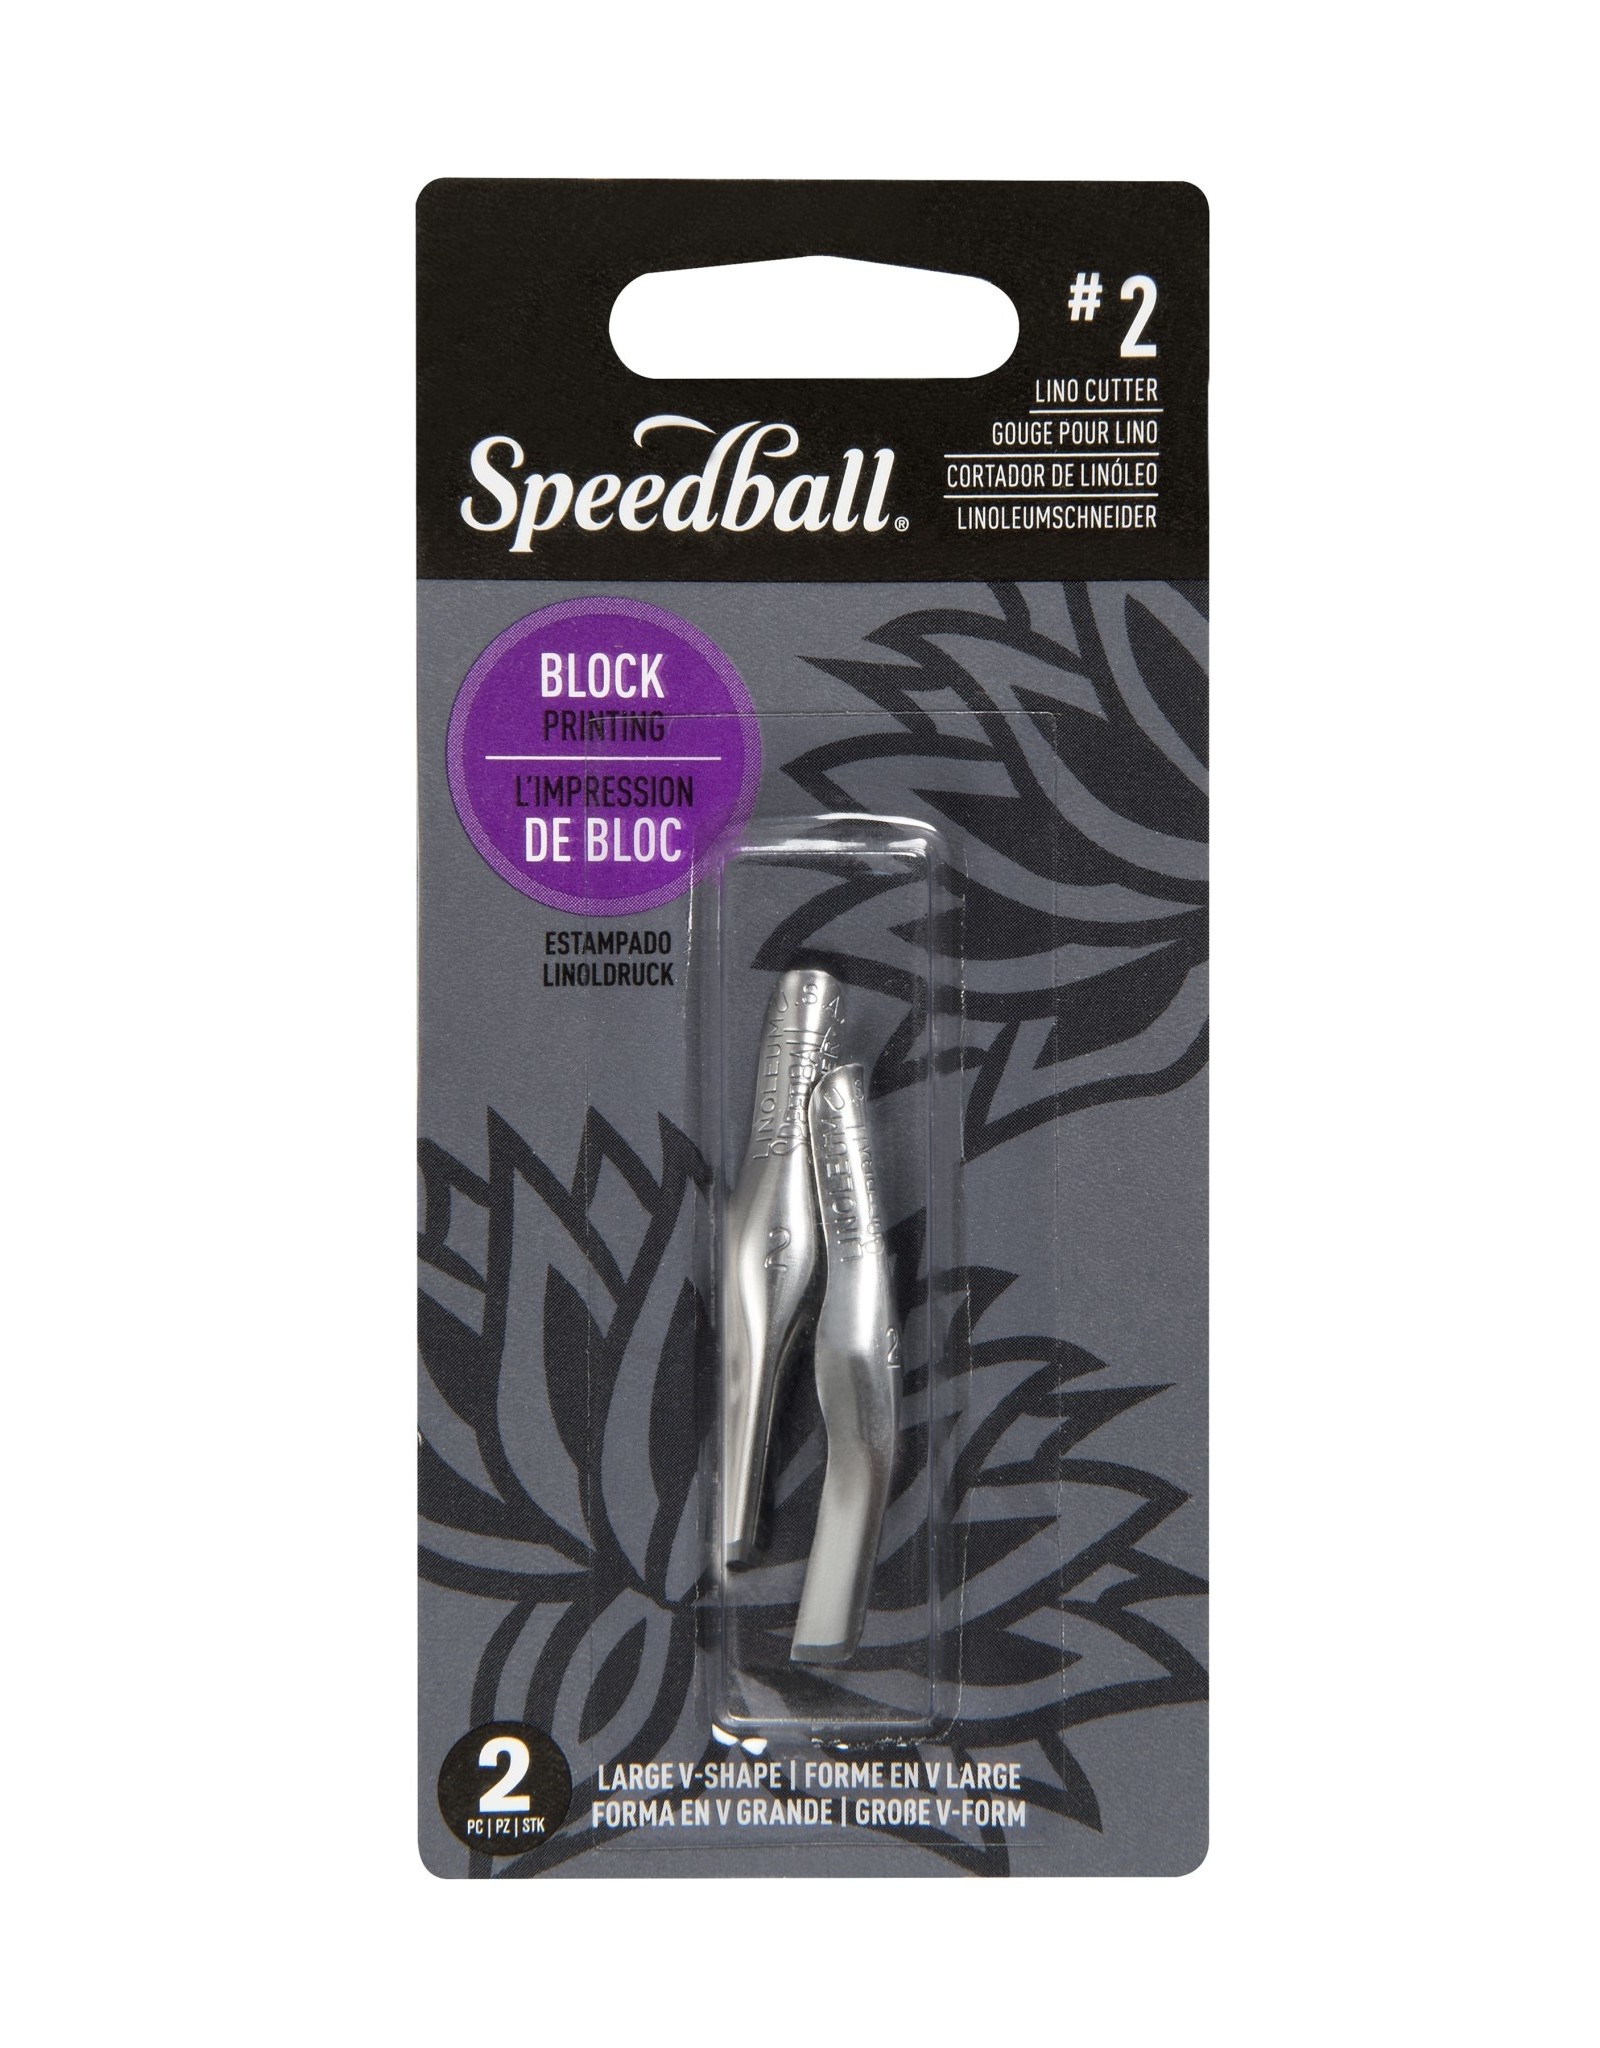 SPEEDBALL ART PRODUCTS Speedball Lino Cutter, #2 Large V, Set of 2